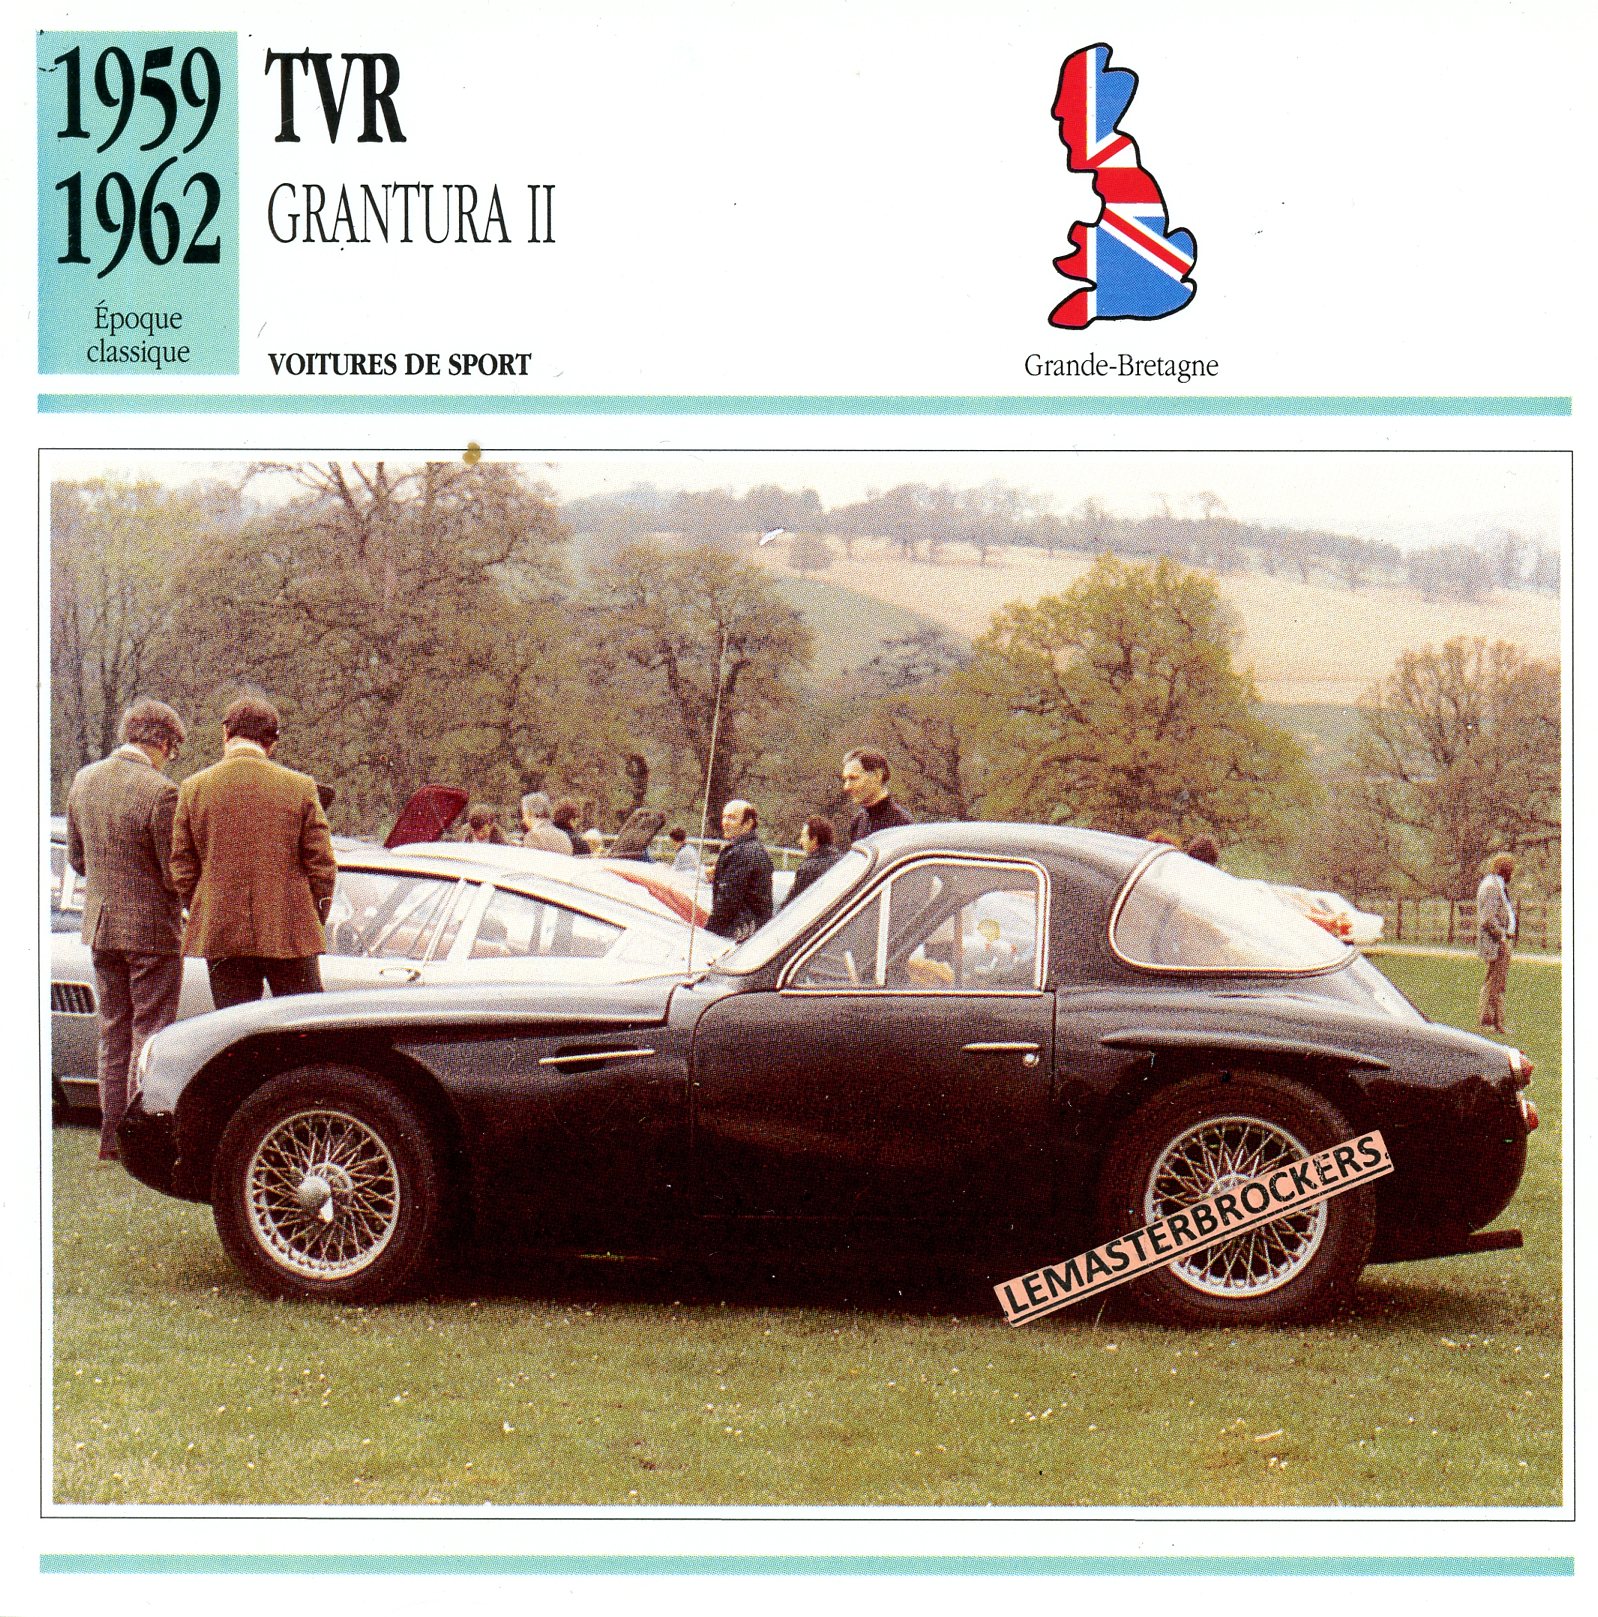 TVR-GRANTURA-1962-FICHE-AUTO-LEMASTERBROCKERS-ATLAS-ÉDITION